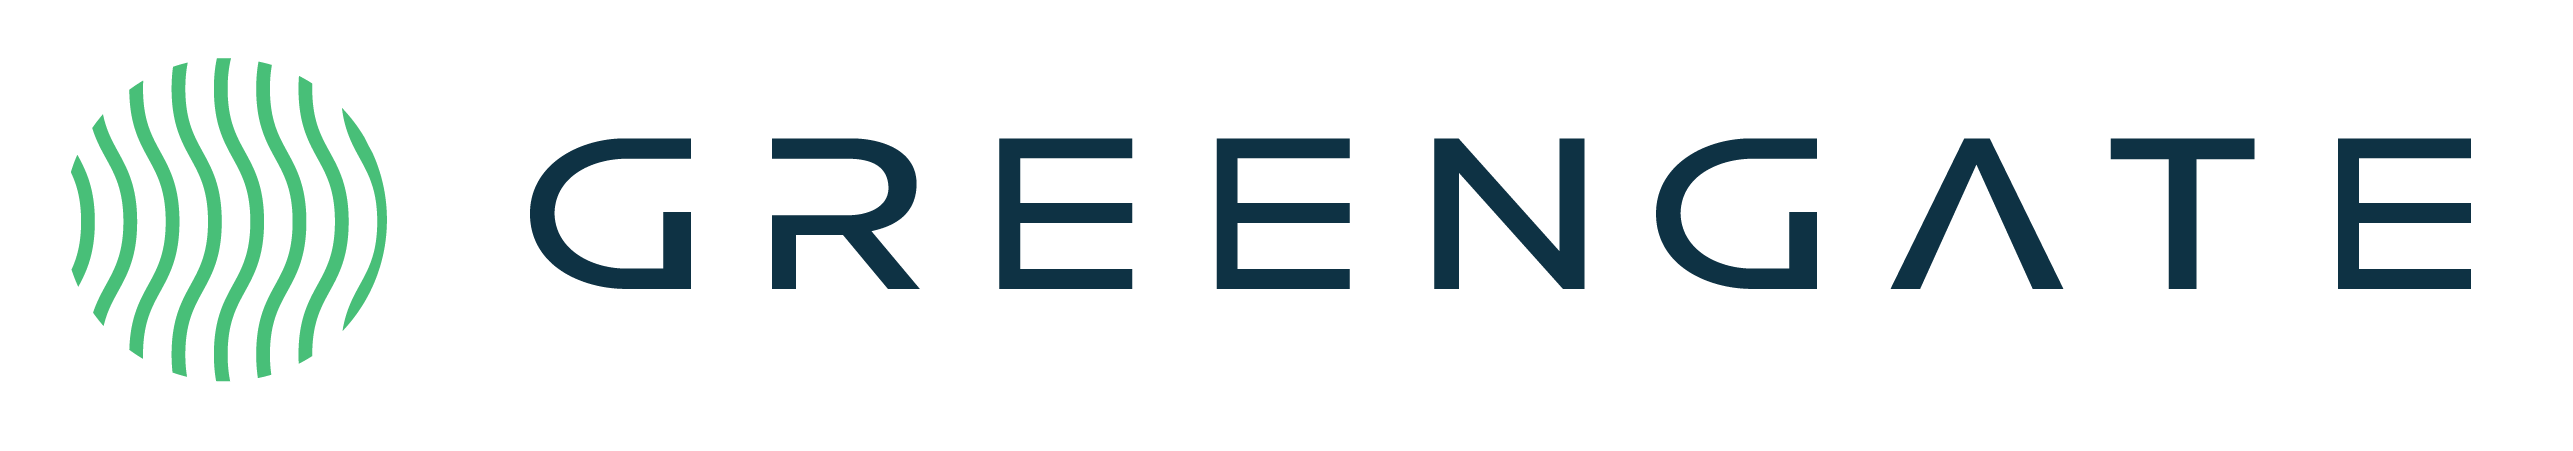 greengate logo